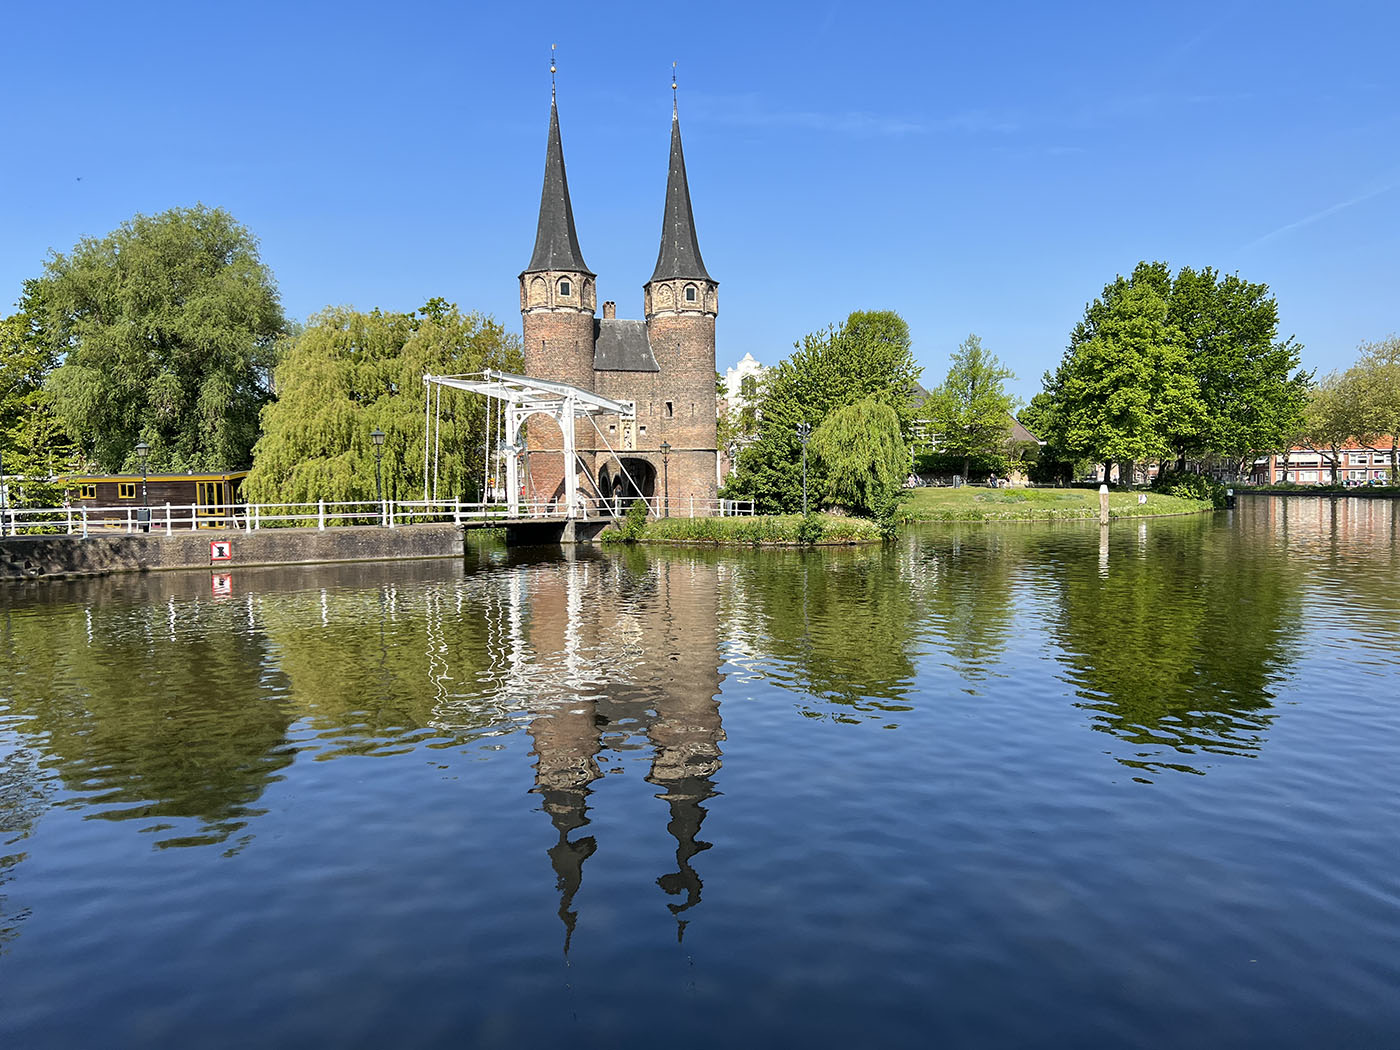 The East Gate - the last remaining city gate of Delft. Netherlands. Credit: Carolina Valenzuela